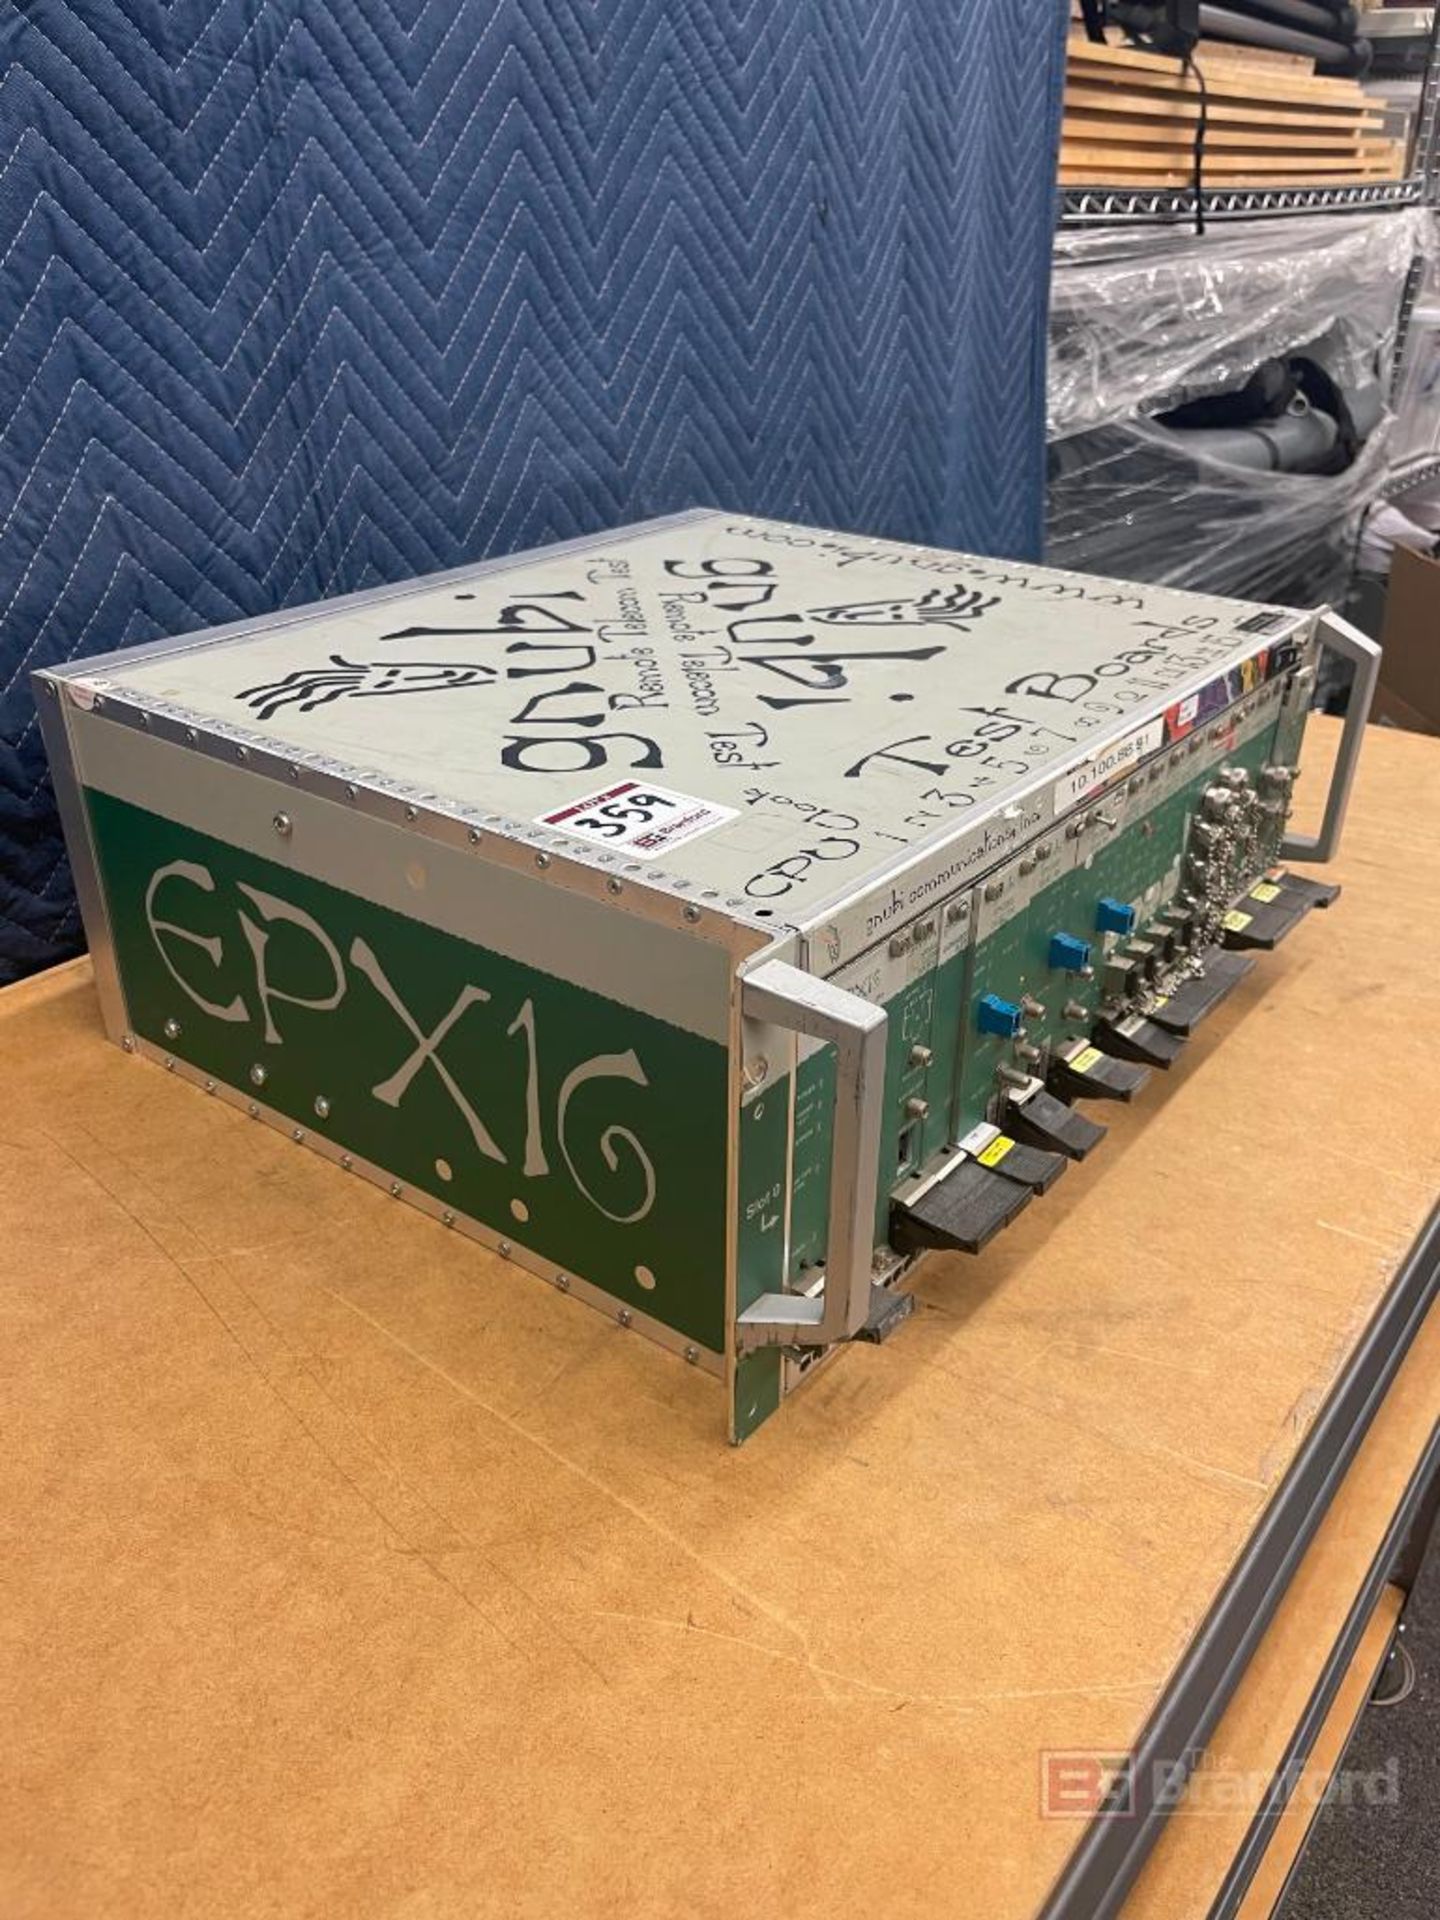 Gnubi communications epx16 spx000 Test Mainframe - Image 2 of 5